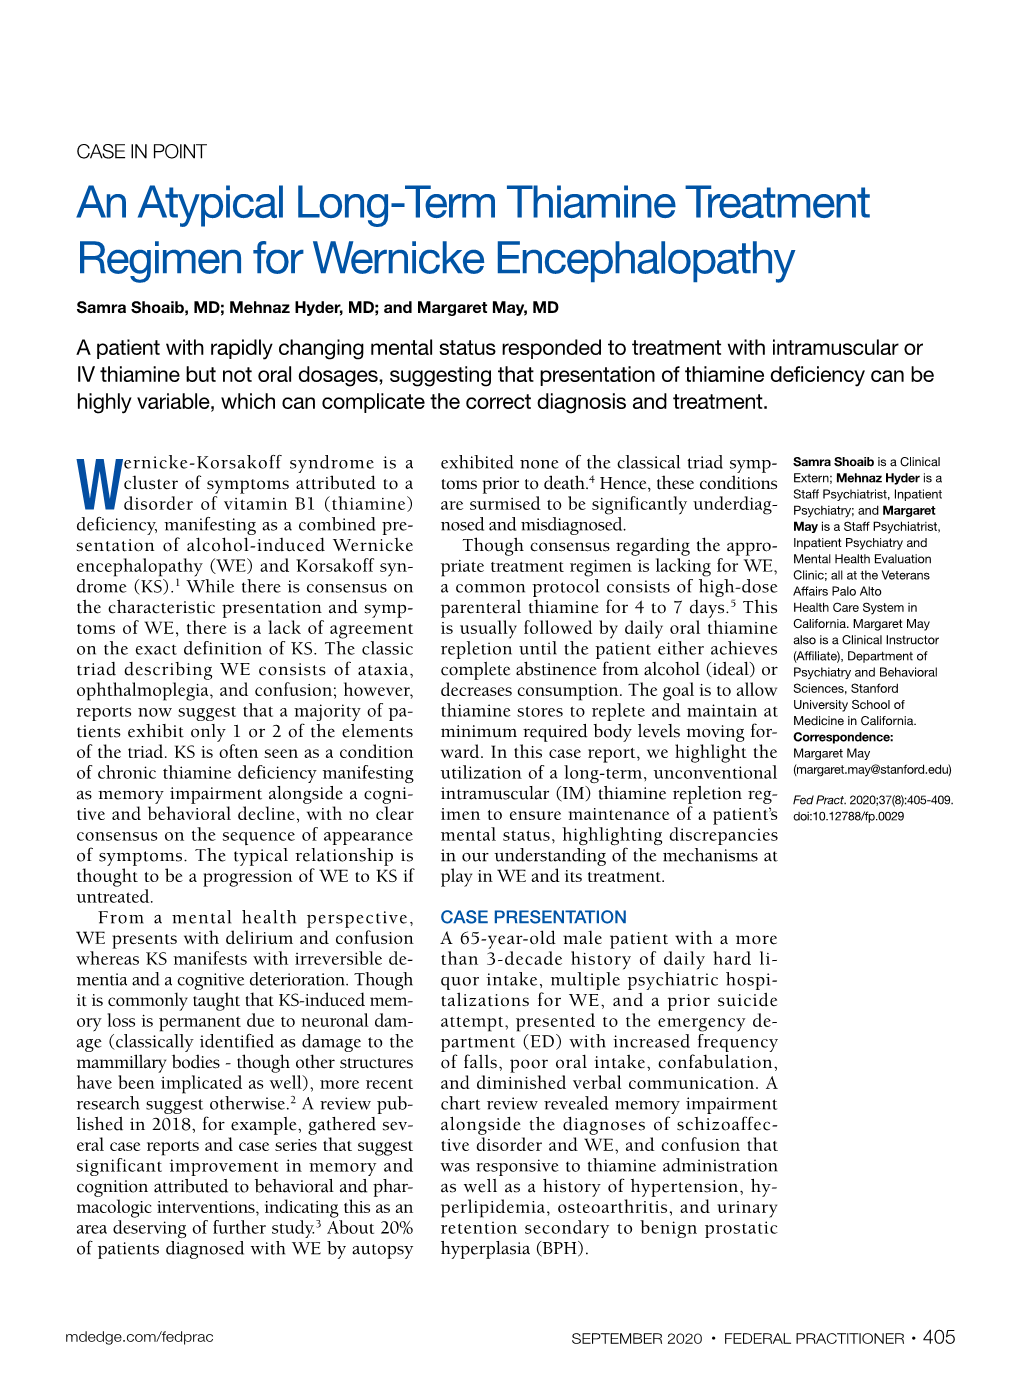 An Atypical Long-Term Thiamine Treatment Regimen for Wernicke Encephalopathy